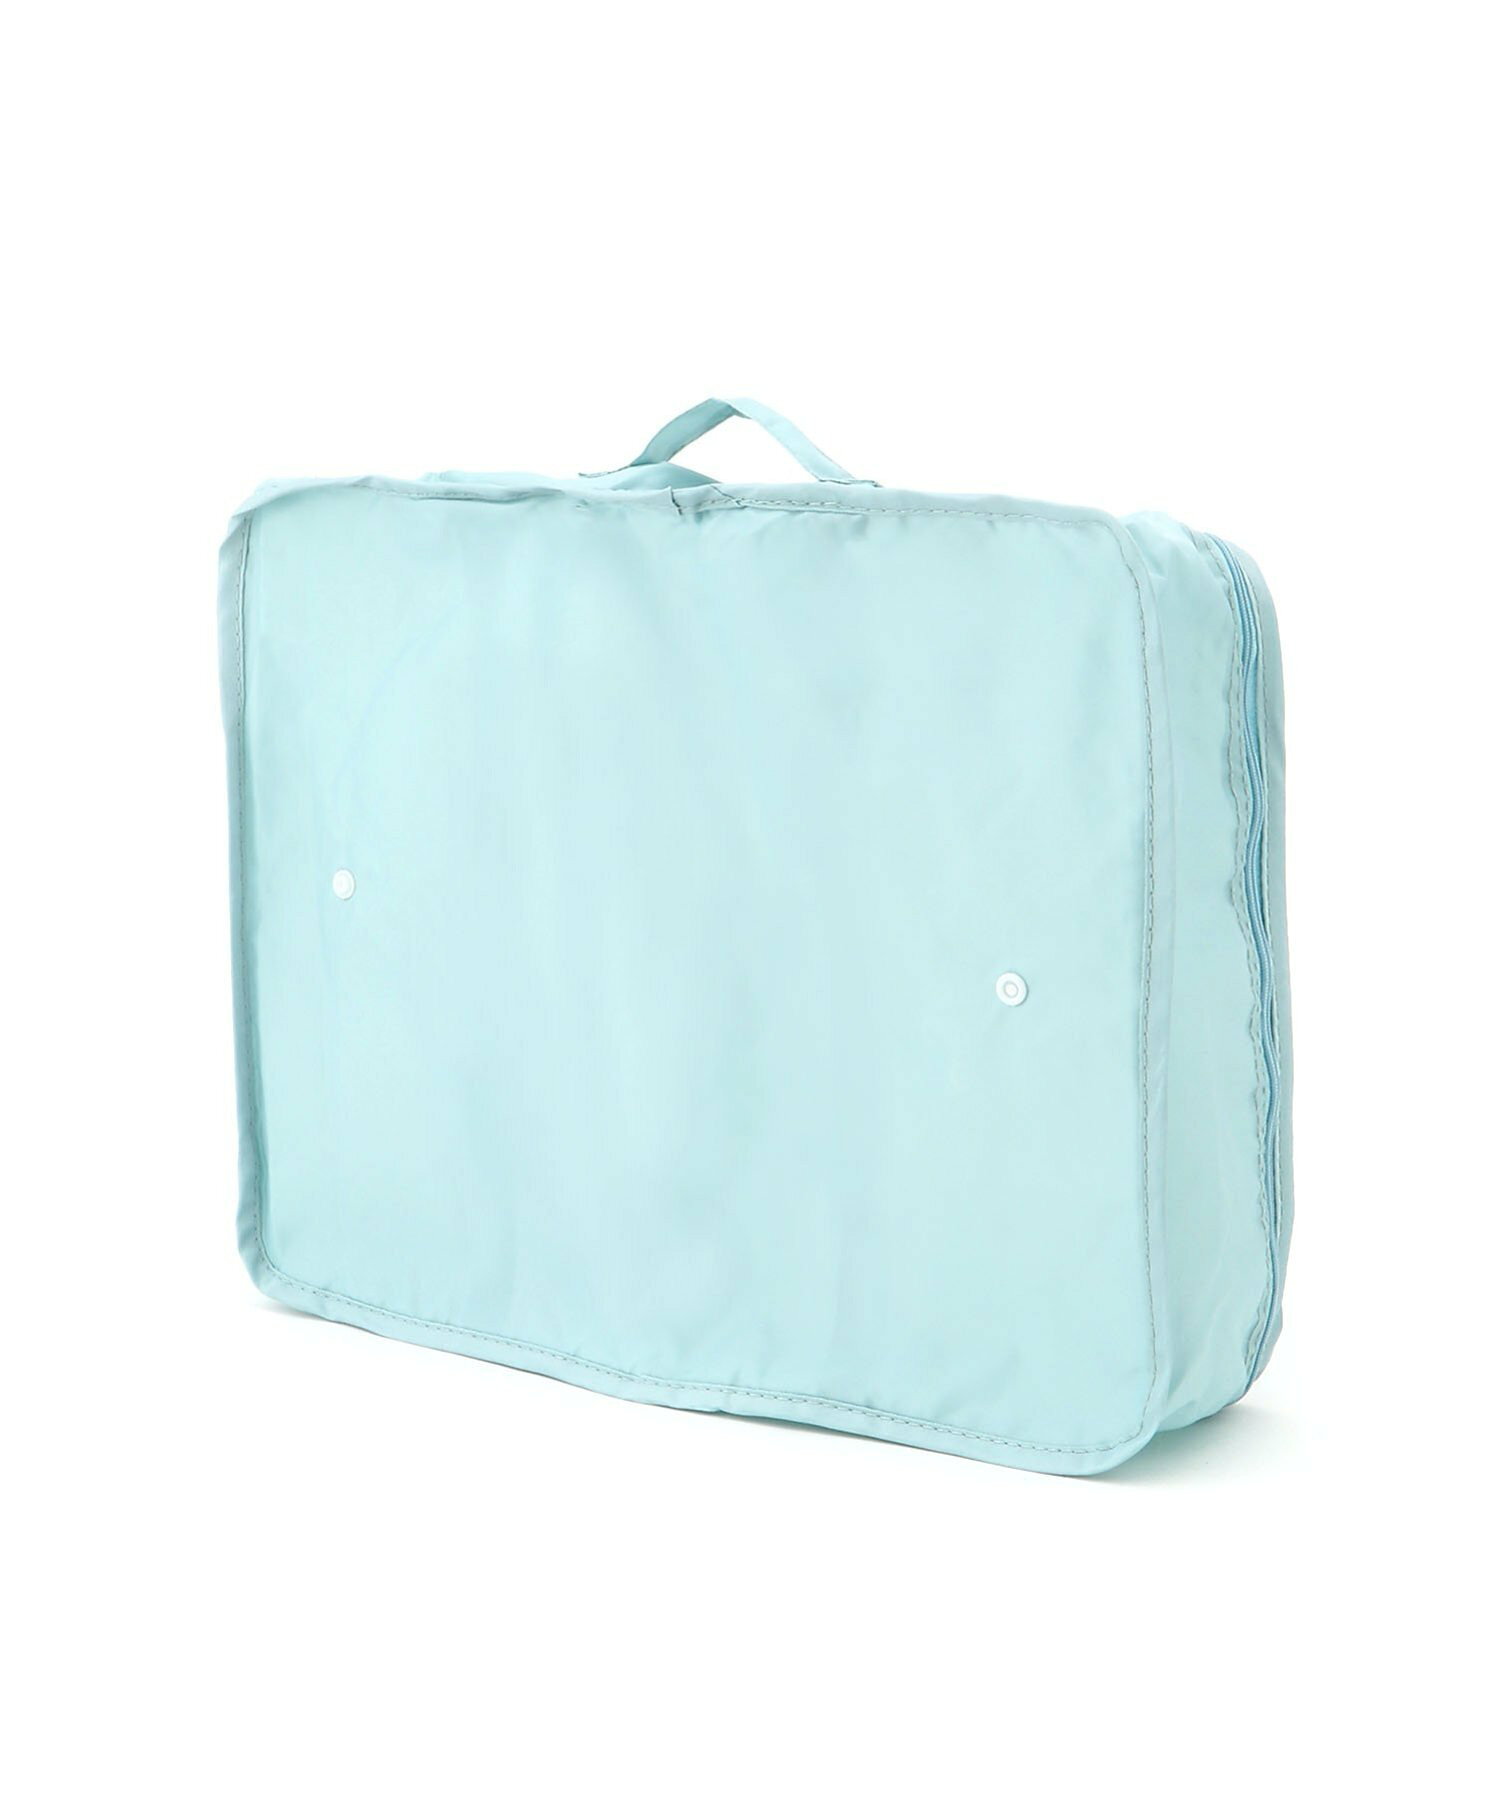 MAISON BREEZE/トラベルポーチ8点セット 旅行 スーツケース 小分け 収納 パッキング ポーチ ランドリーバッグ 巾着 バッグインバッグ